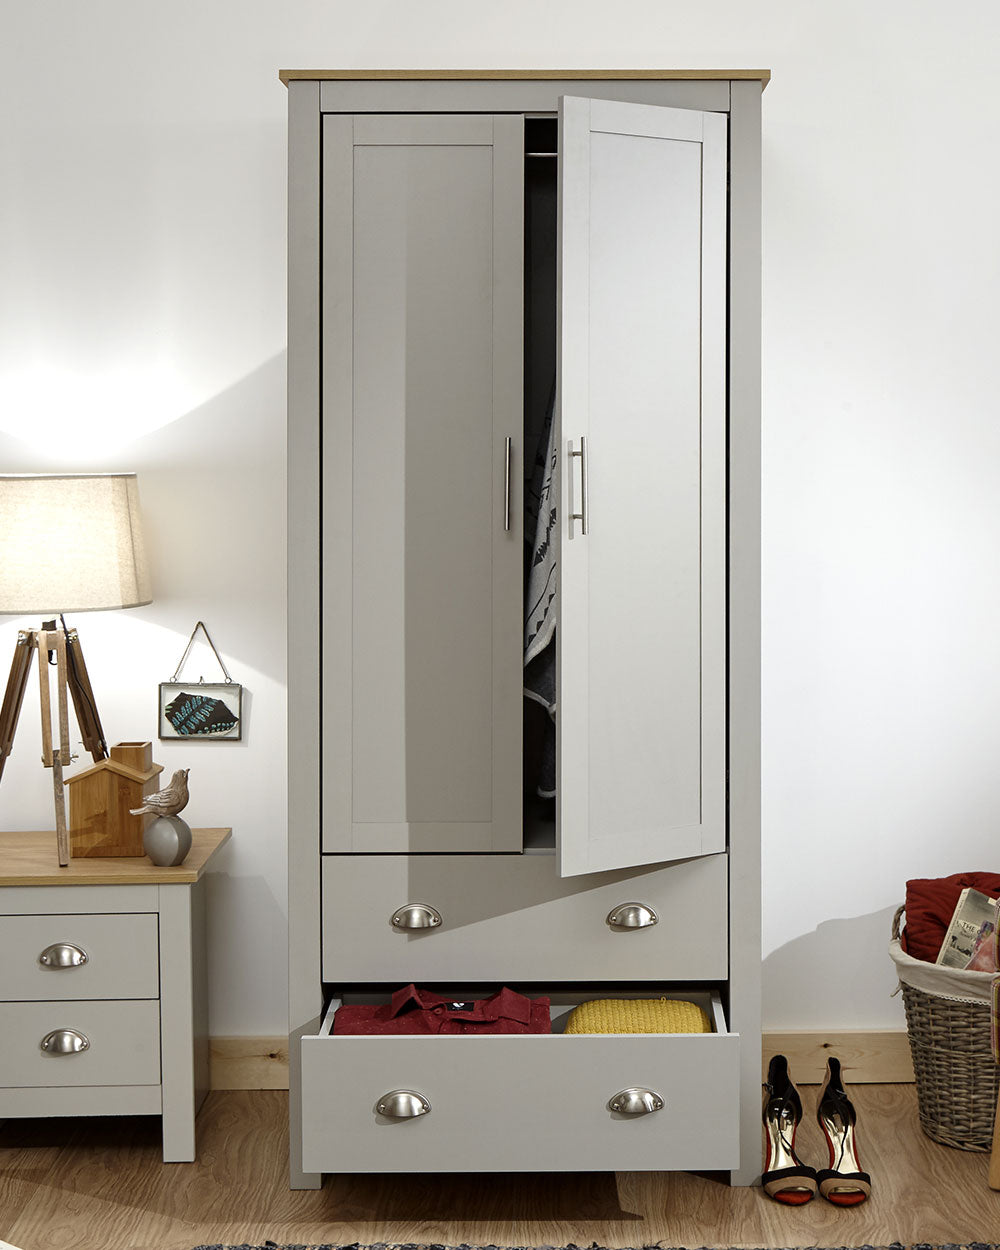 Lancaster 2 Door 2 Drawer wardrobe in sleek grey with an oak effect top in a bedroom setting with the doors open